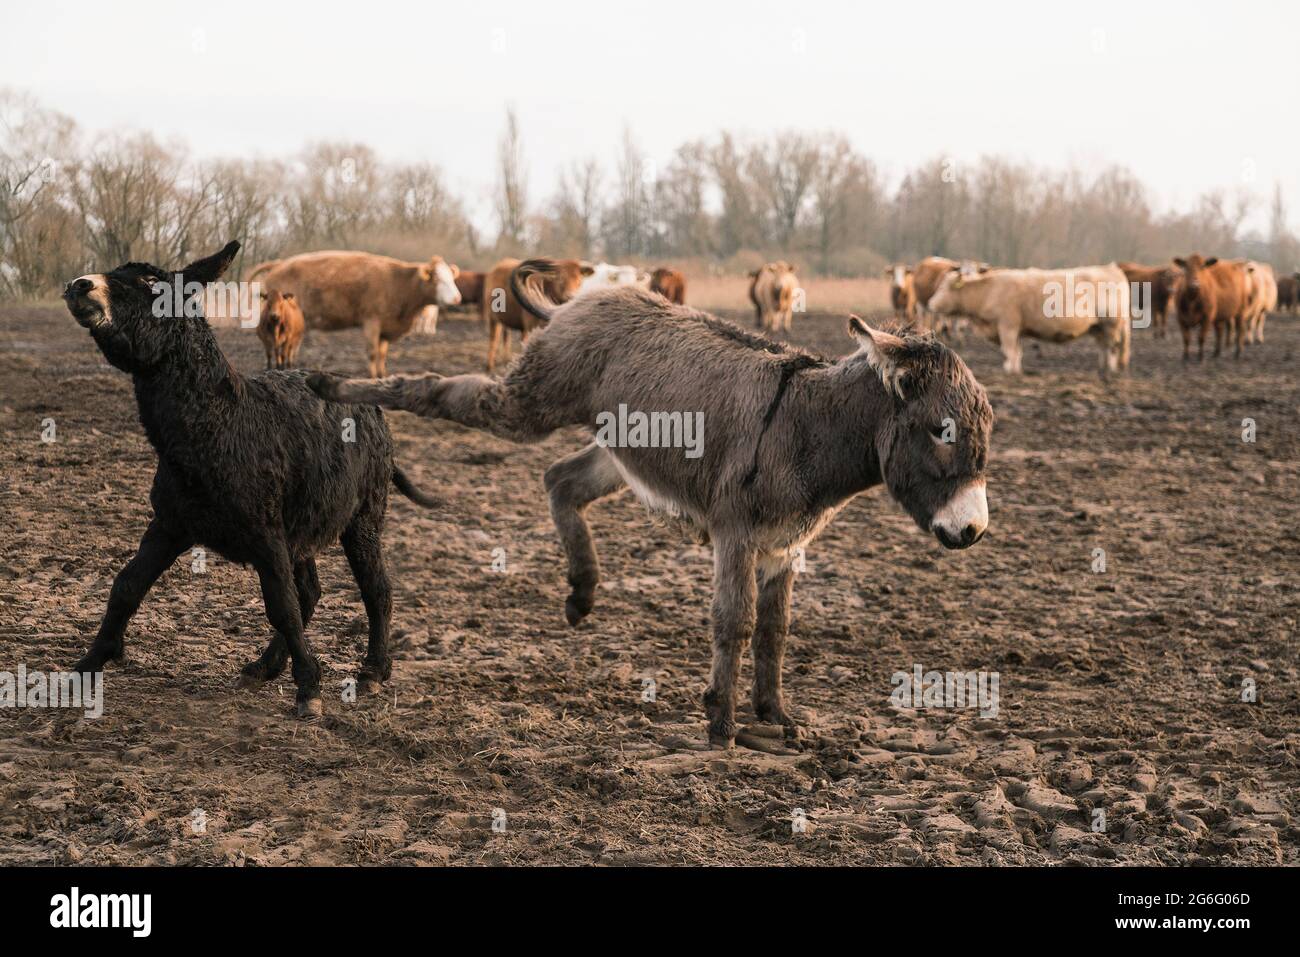 Donkeys kicking in rural field Stock Photo